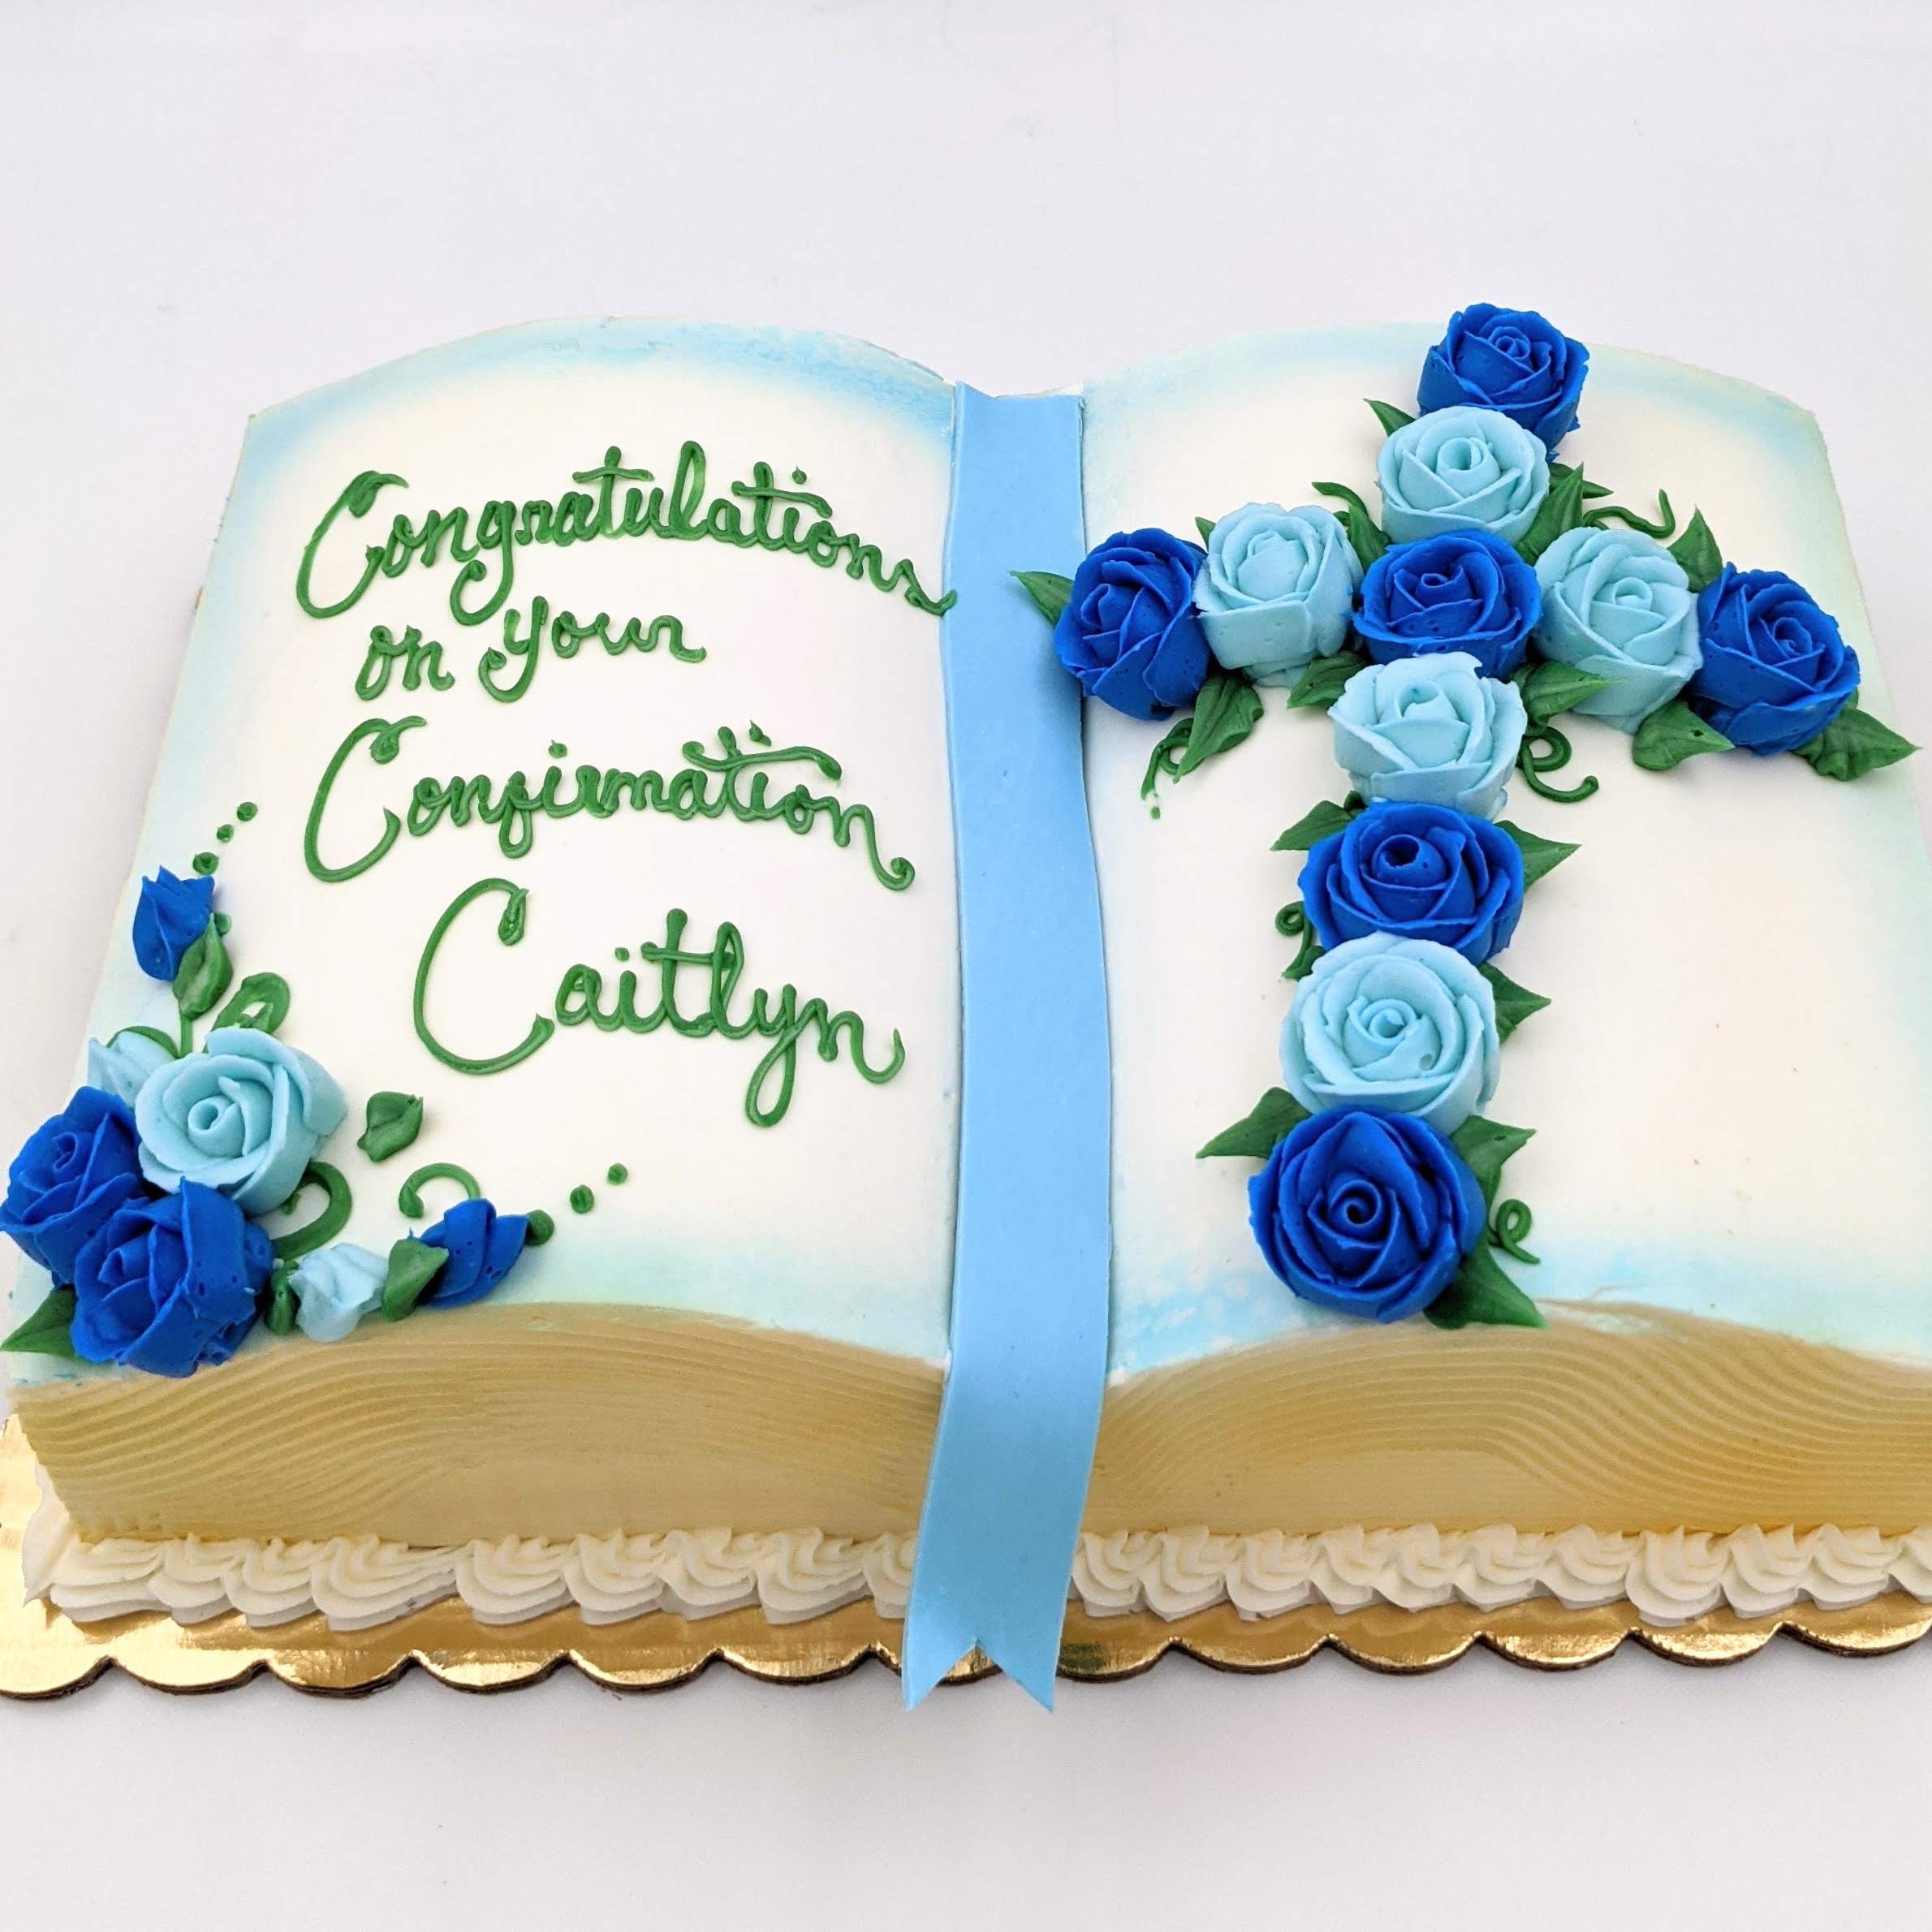 Caroline's Cakes - Chocolate biscuit Confirmation cake! | Facebook